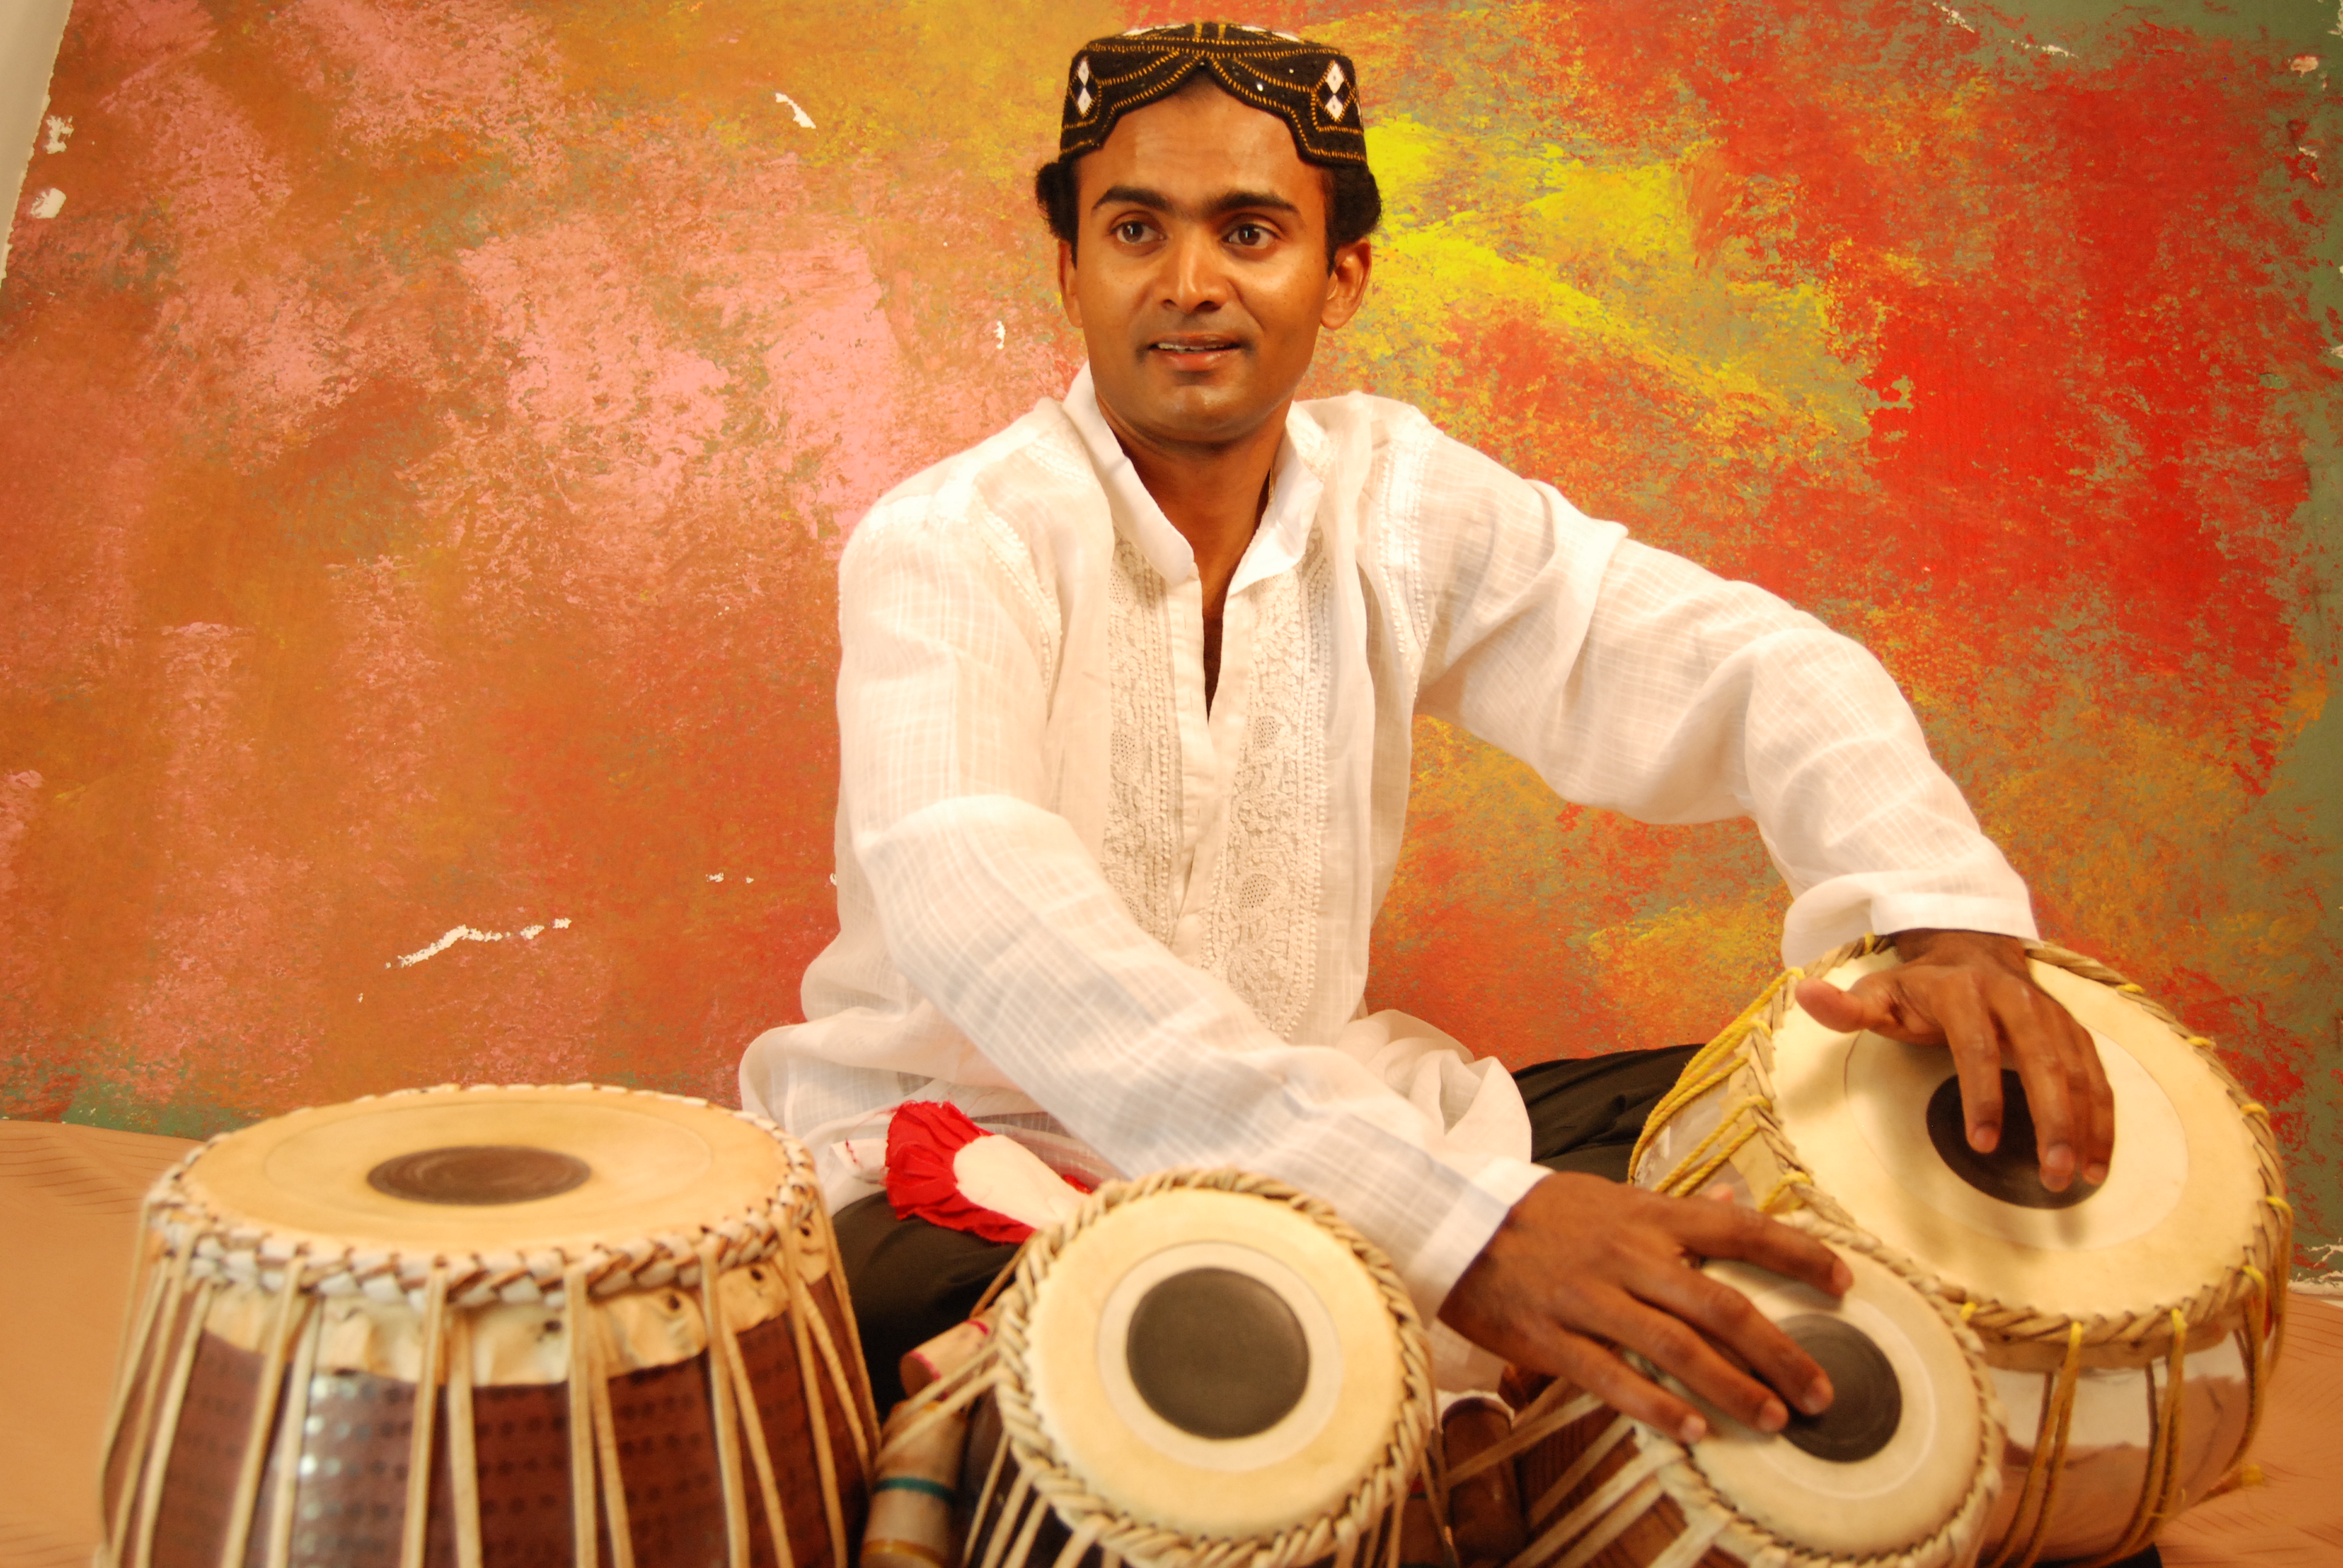 The Indian Percussion - Tabla